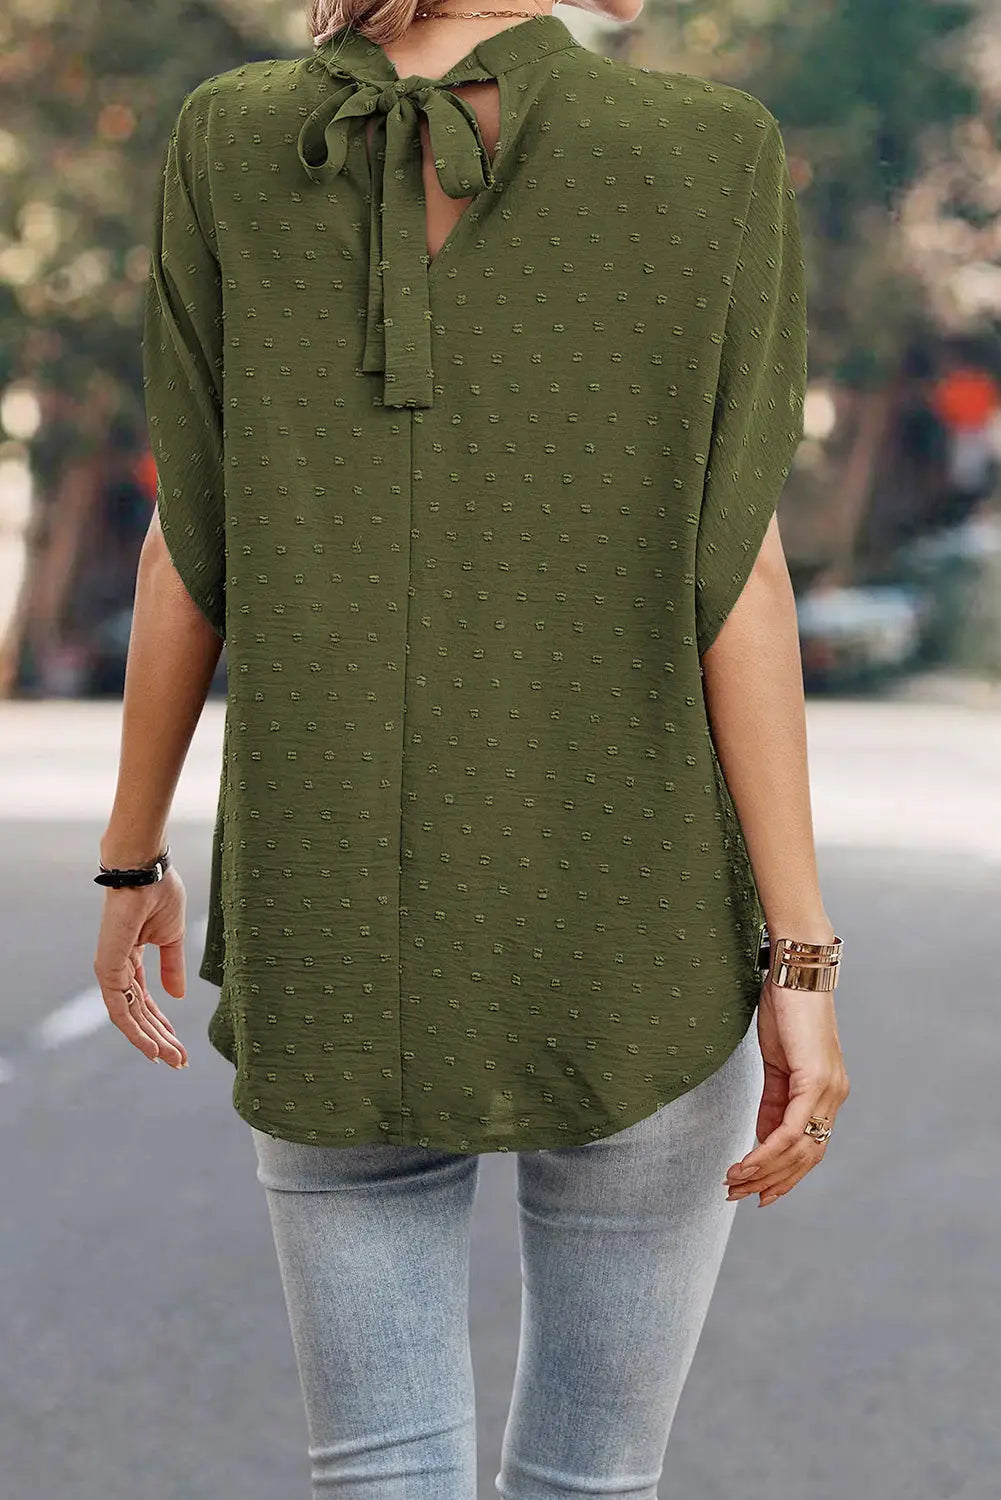 Mist green swiss dot mock neck batwing sleeve blouse - blouses & shirts